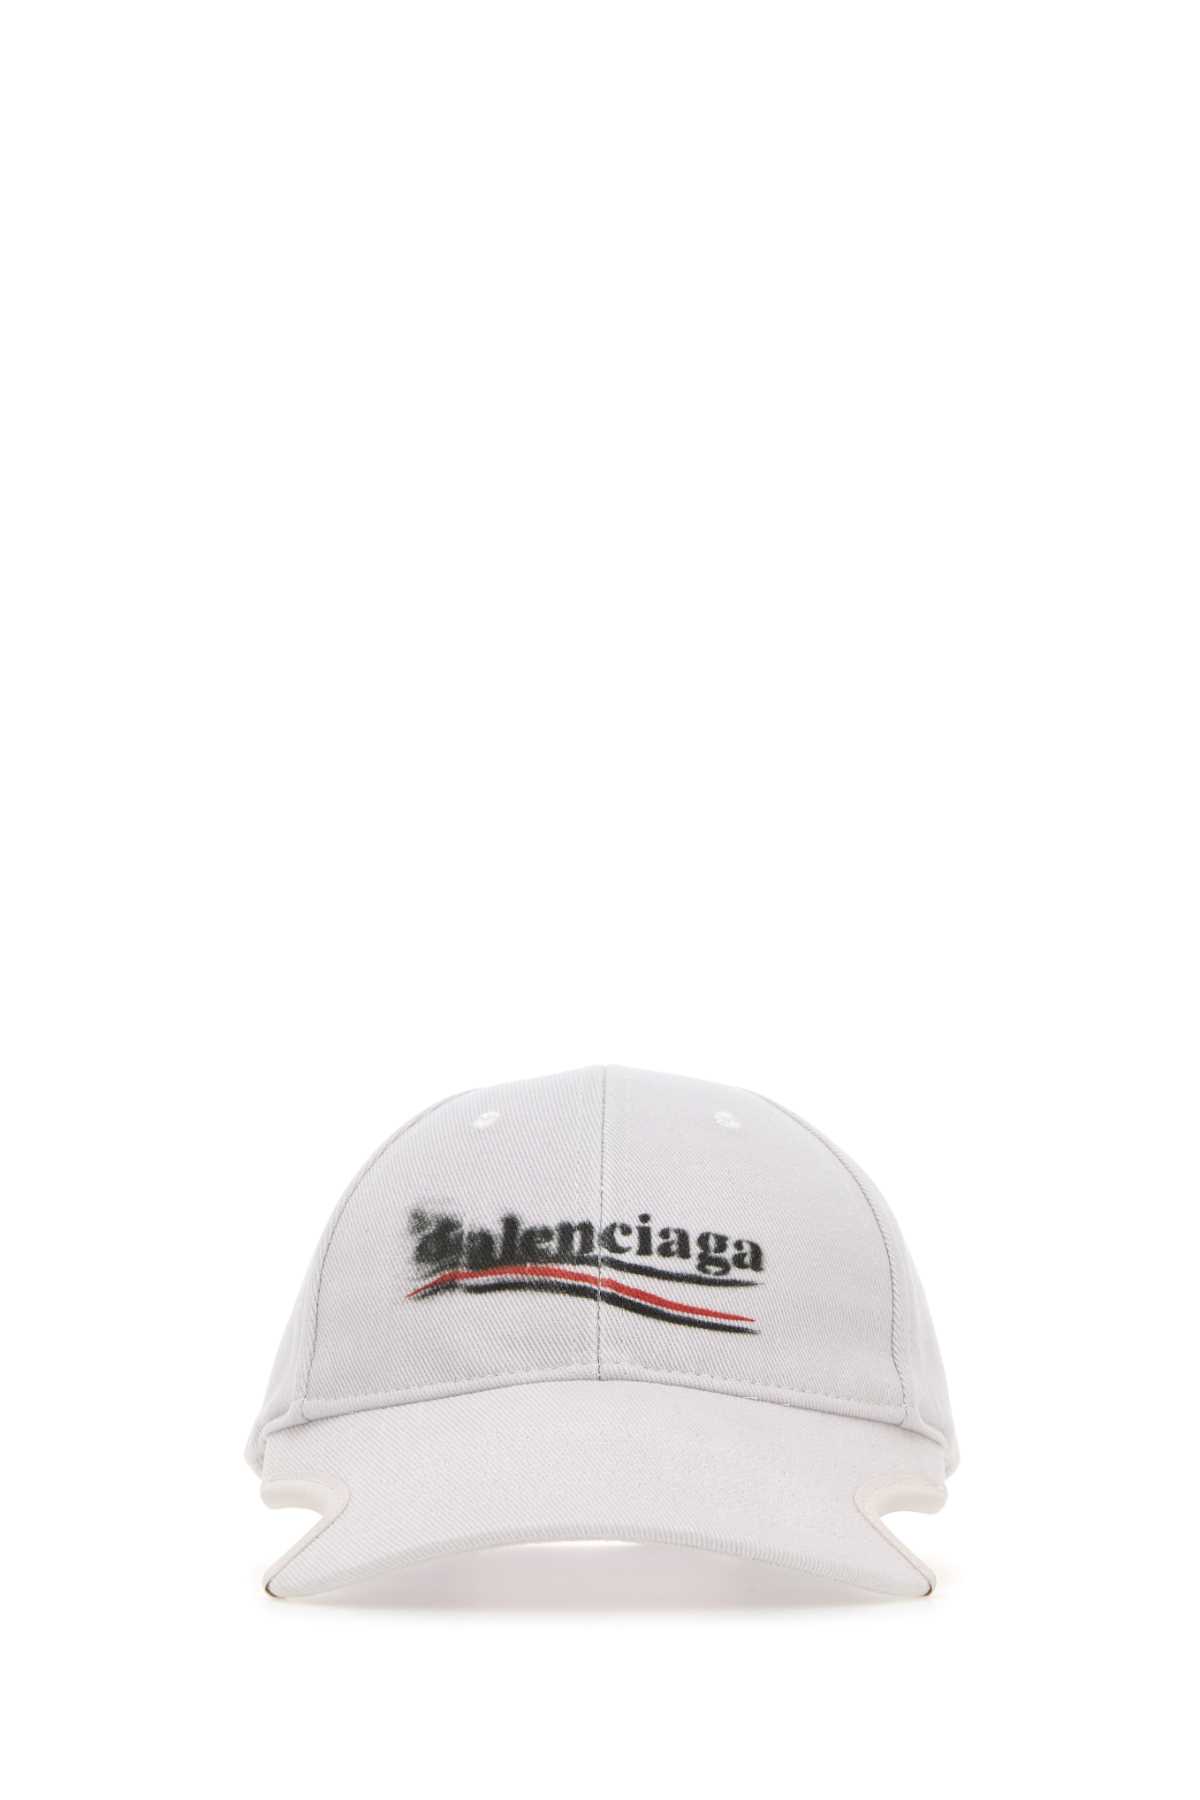 Balenciaga Hats In Offwhiteblack